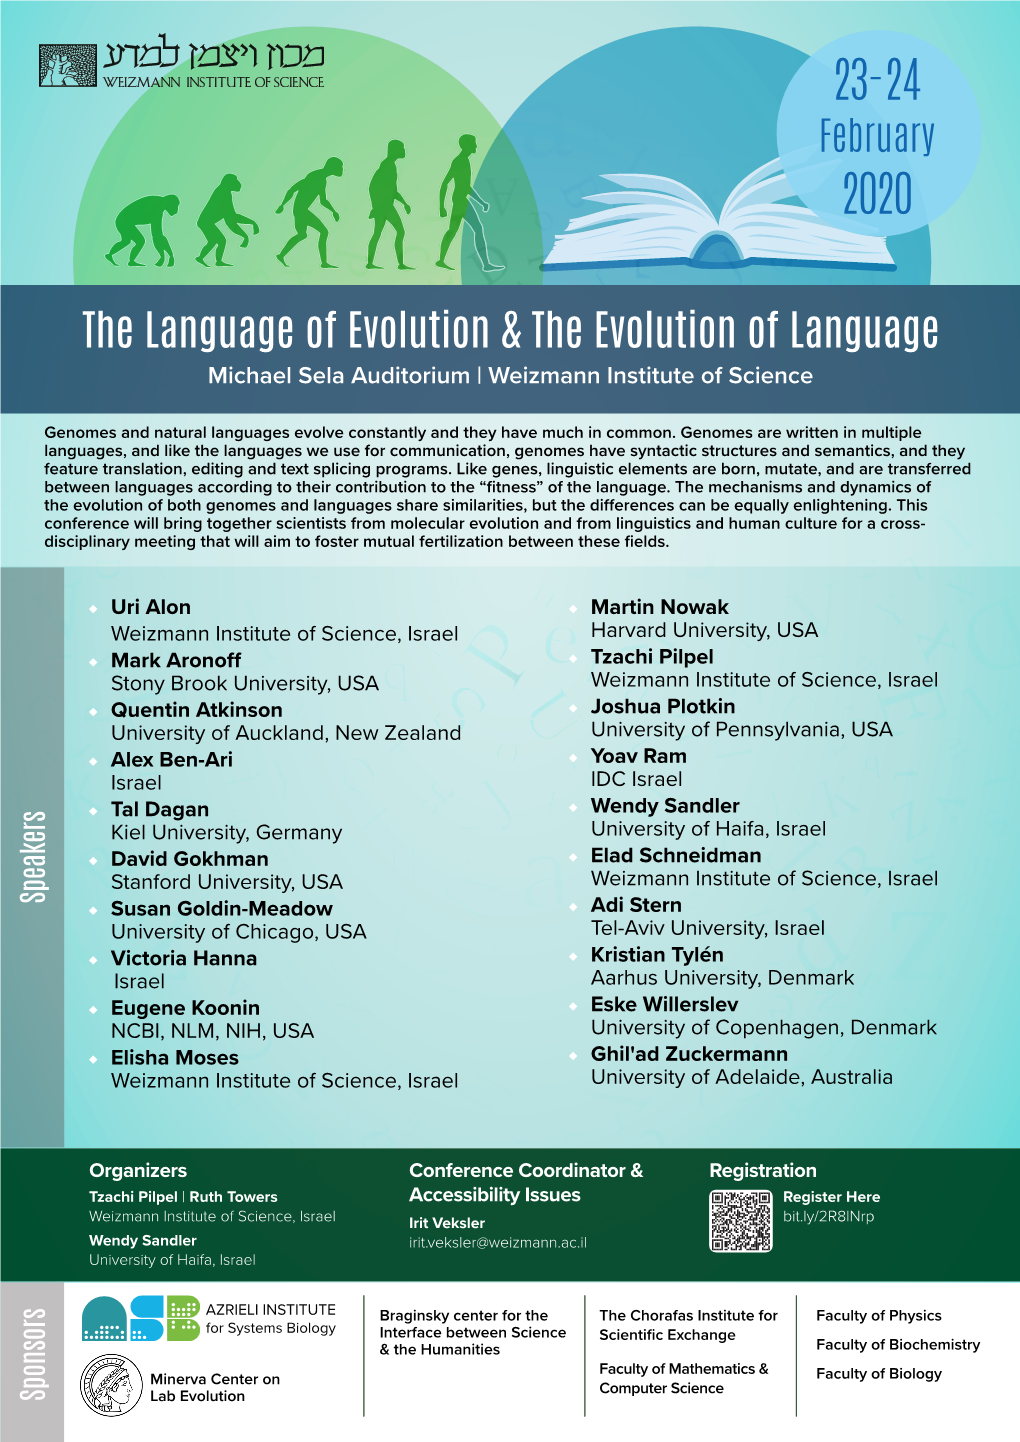 The Language of Evolution & the Evolution of Language